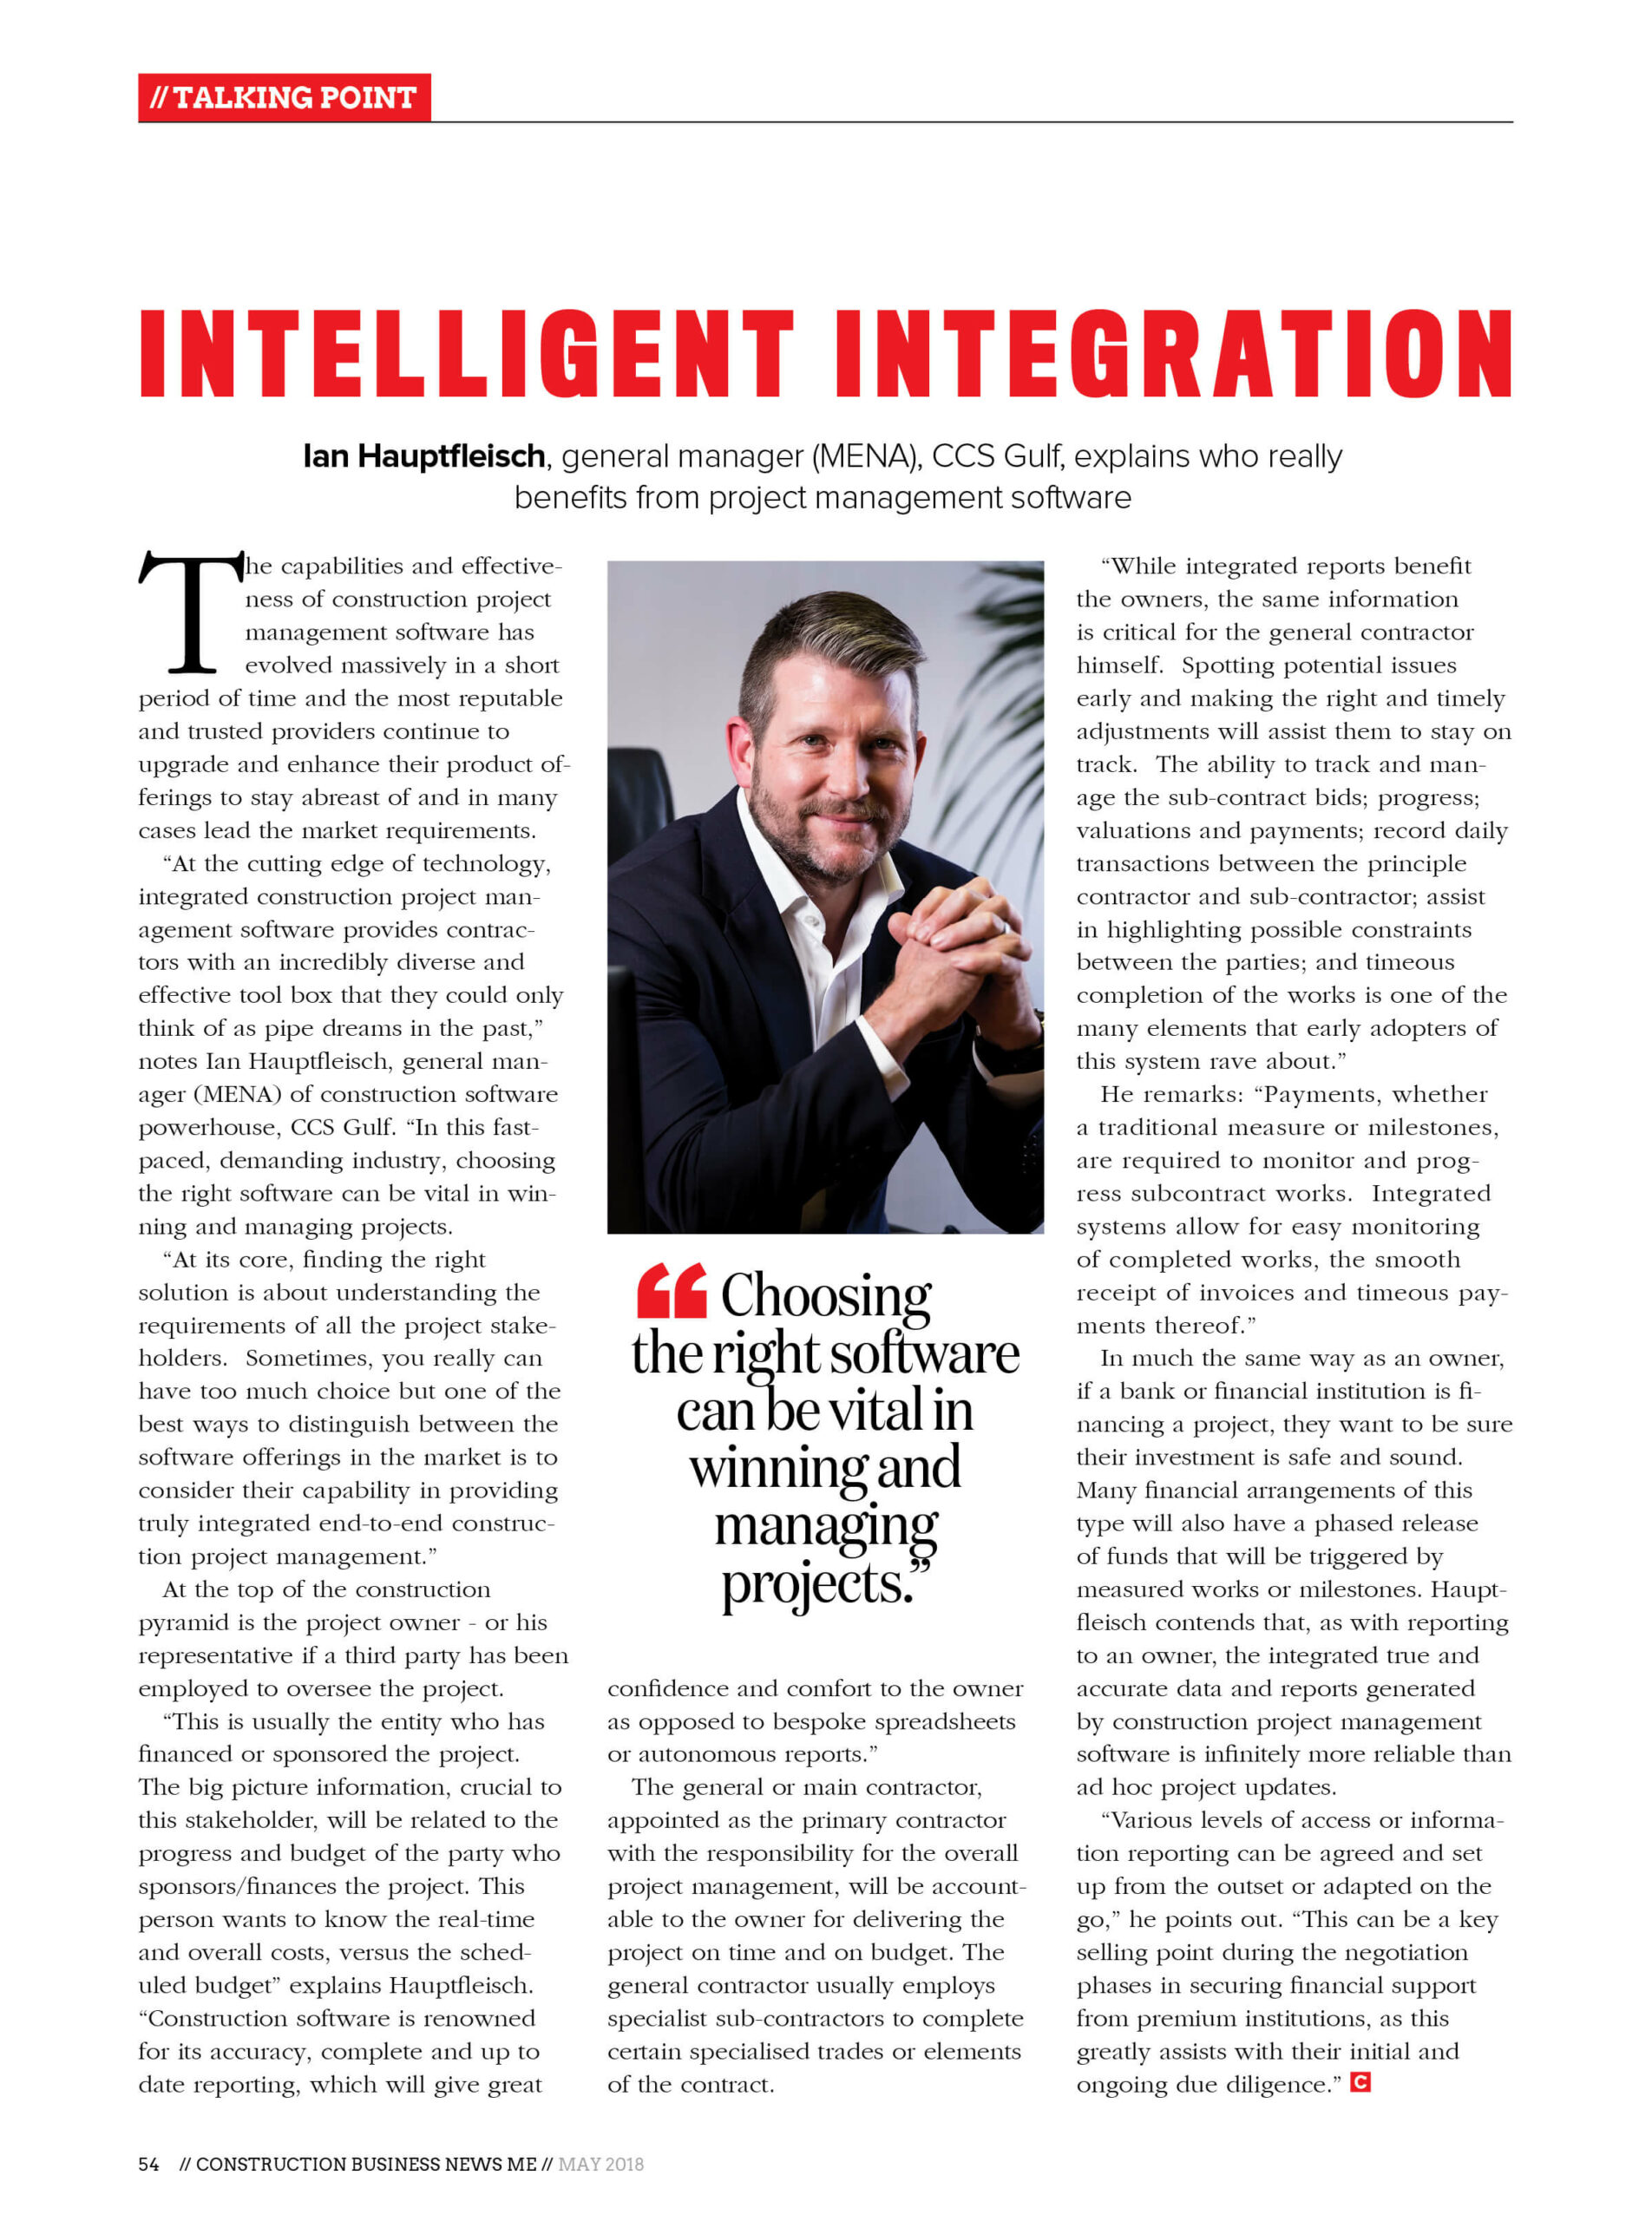 Intelligent Integration with Ian Hauptfleisch